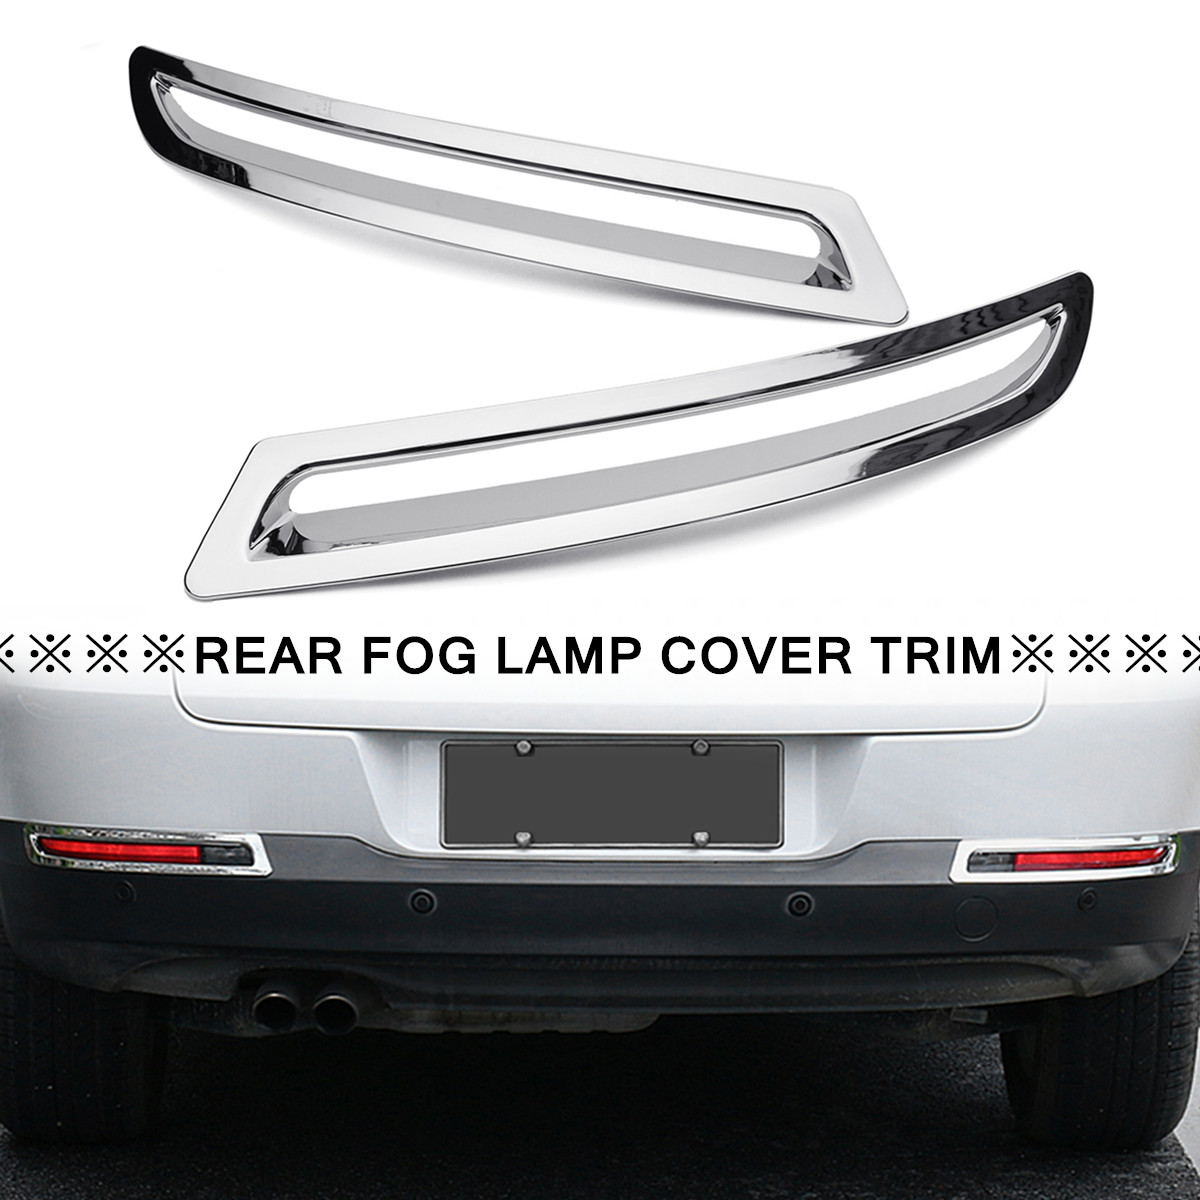 2Pcs-Chrome-ABS-Car-Rear-Fog-Lamp-Cover-Trims-Light-Decor-for-VW-Tiguan-2010-2015-1381992